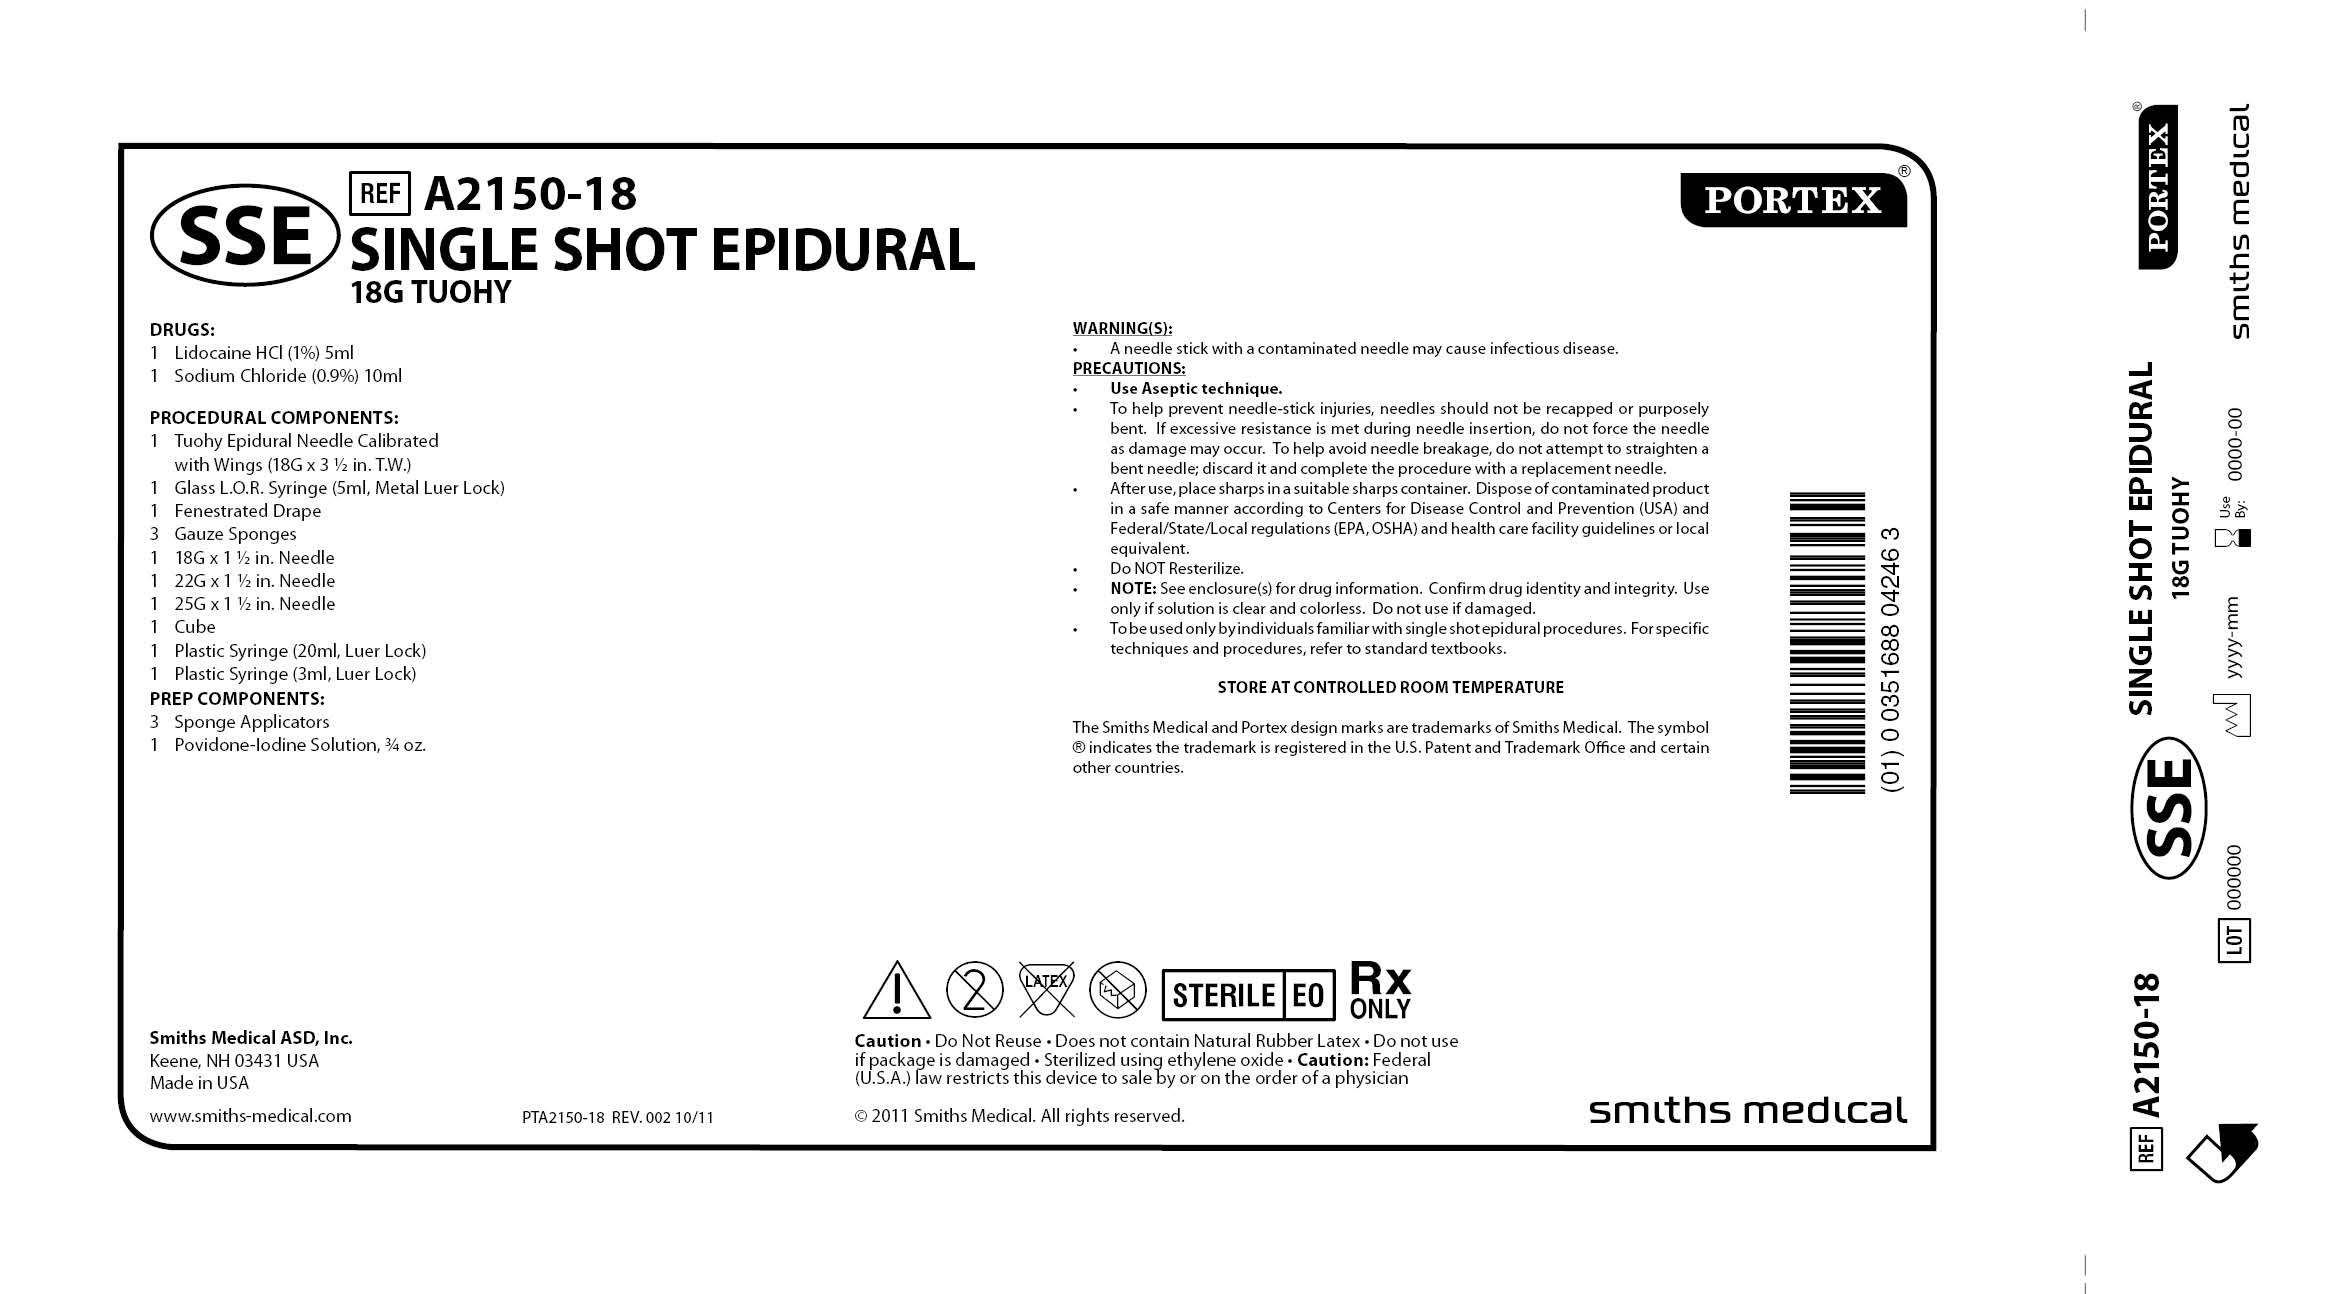 A2150-18 SINGLE SHOT EPIDURAL